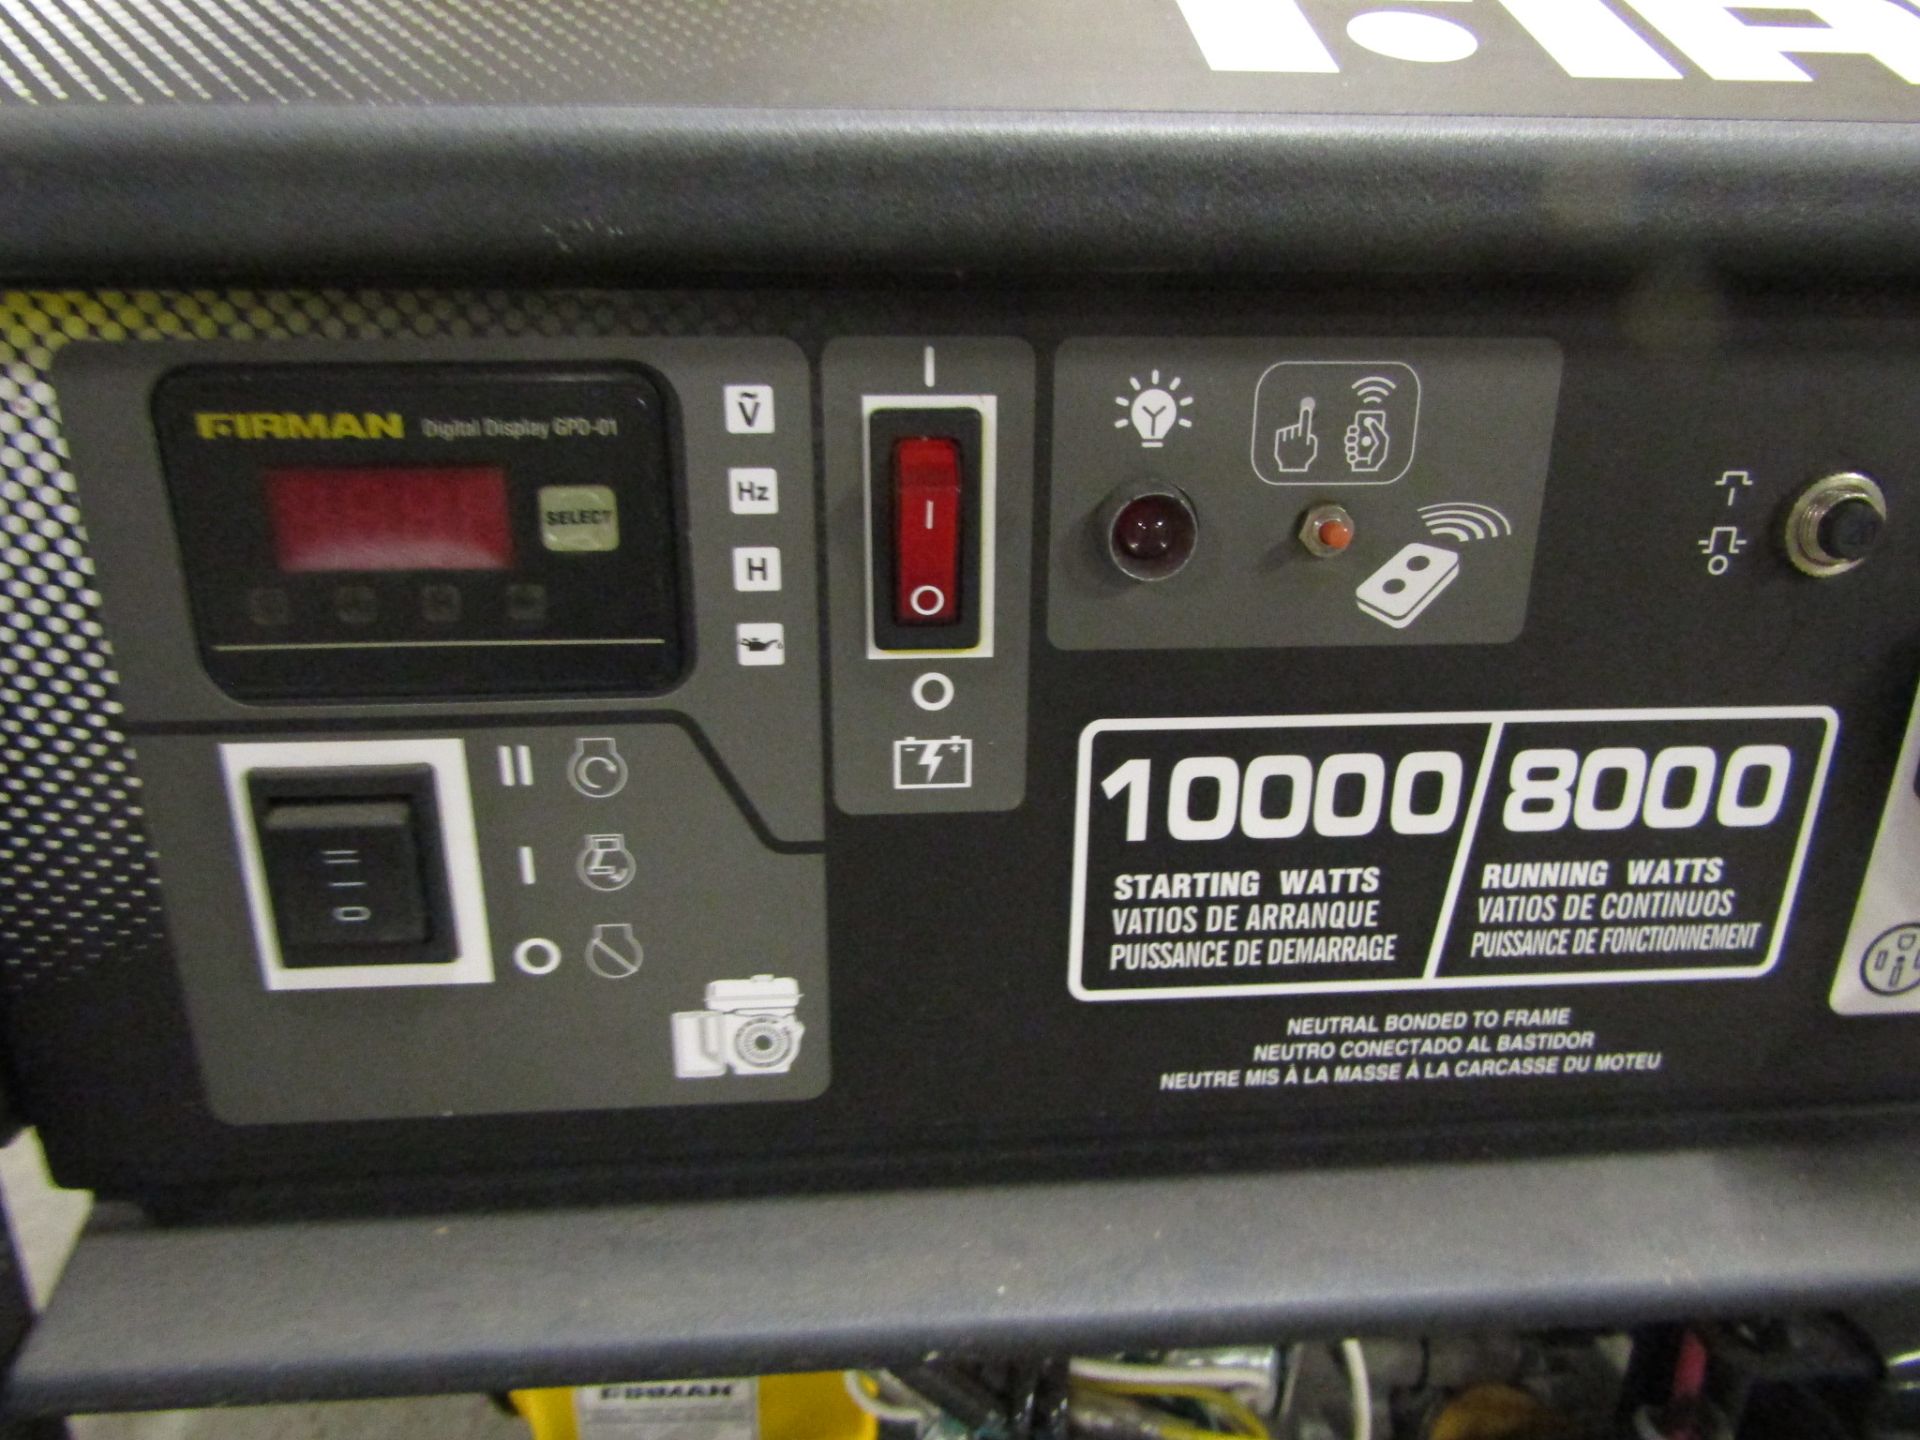 Firman Model P08004 - 8000W Generator 120/240V single phase - Image 2 of 4